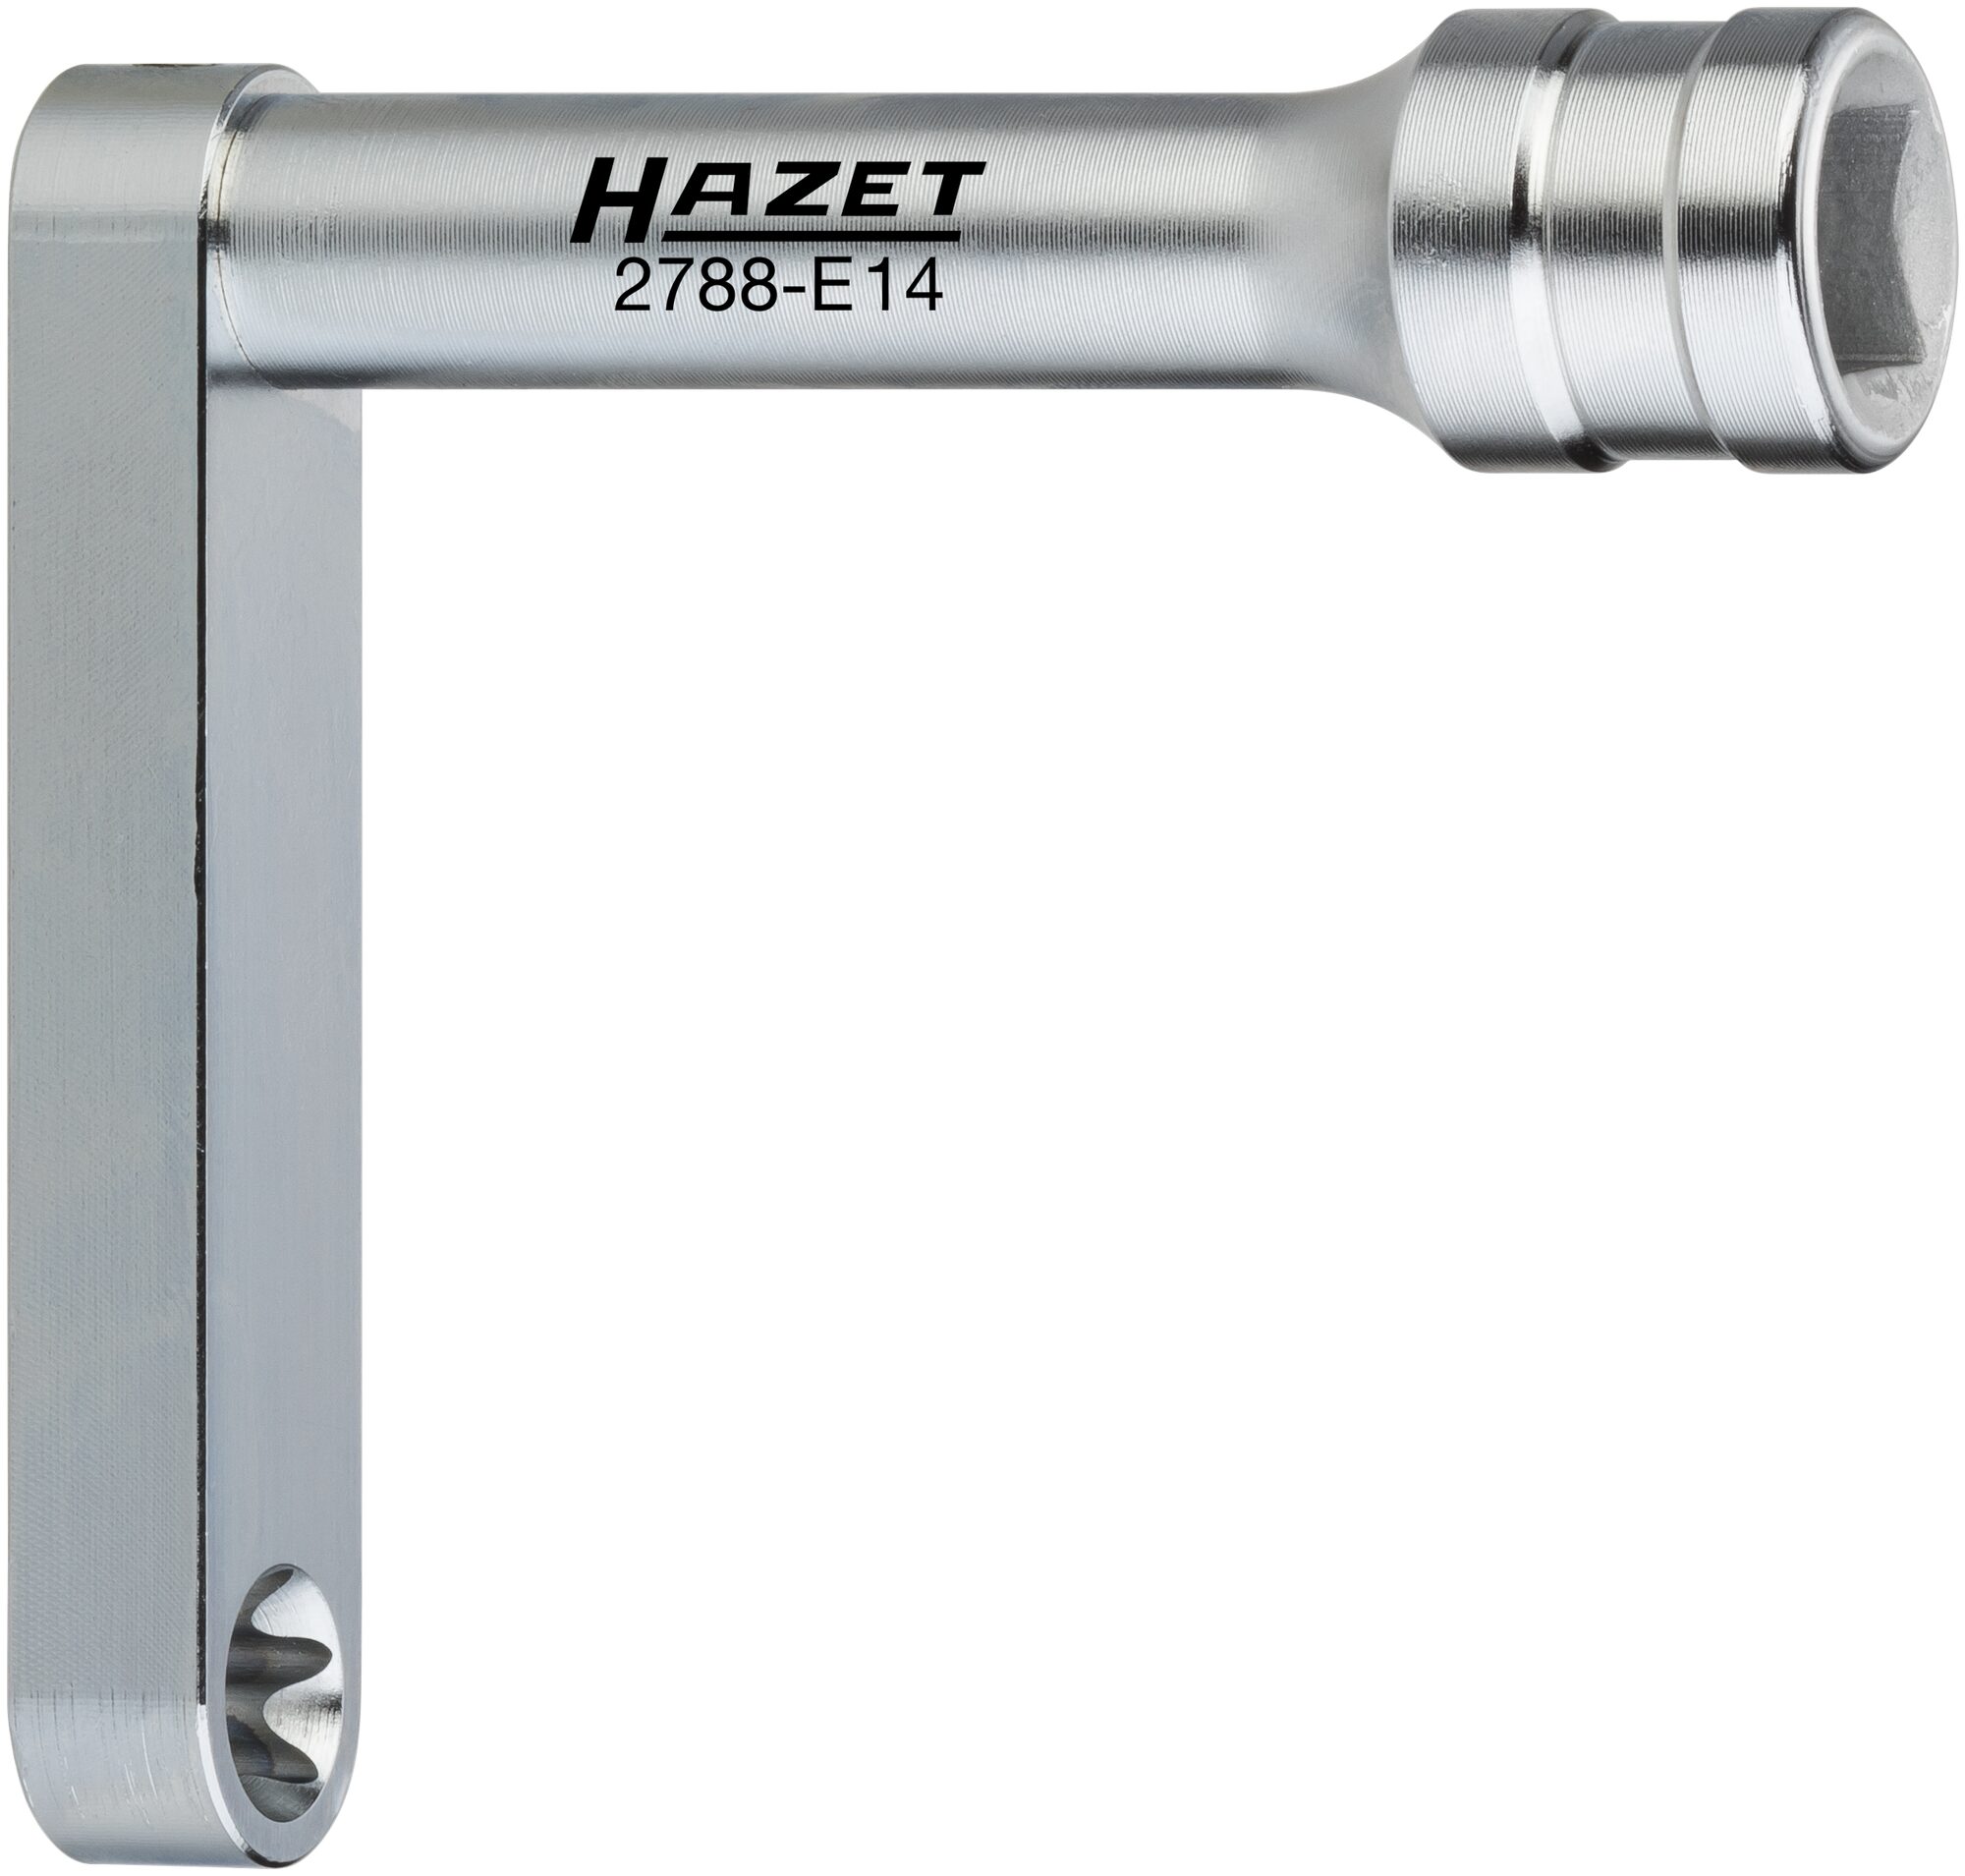 HAZET Nockenwellenräder-Verschraubung Spezialwerkzeug 2788-E14 · Vierkant hohl 12,5 mm (1/2 Zoll) · Außen TORX® Profil · E14